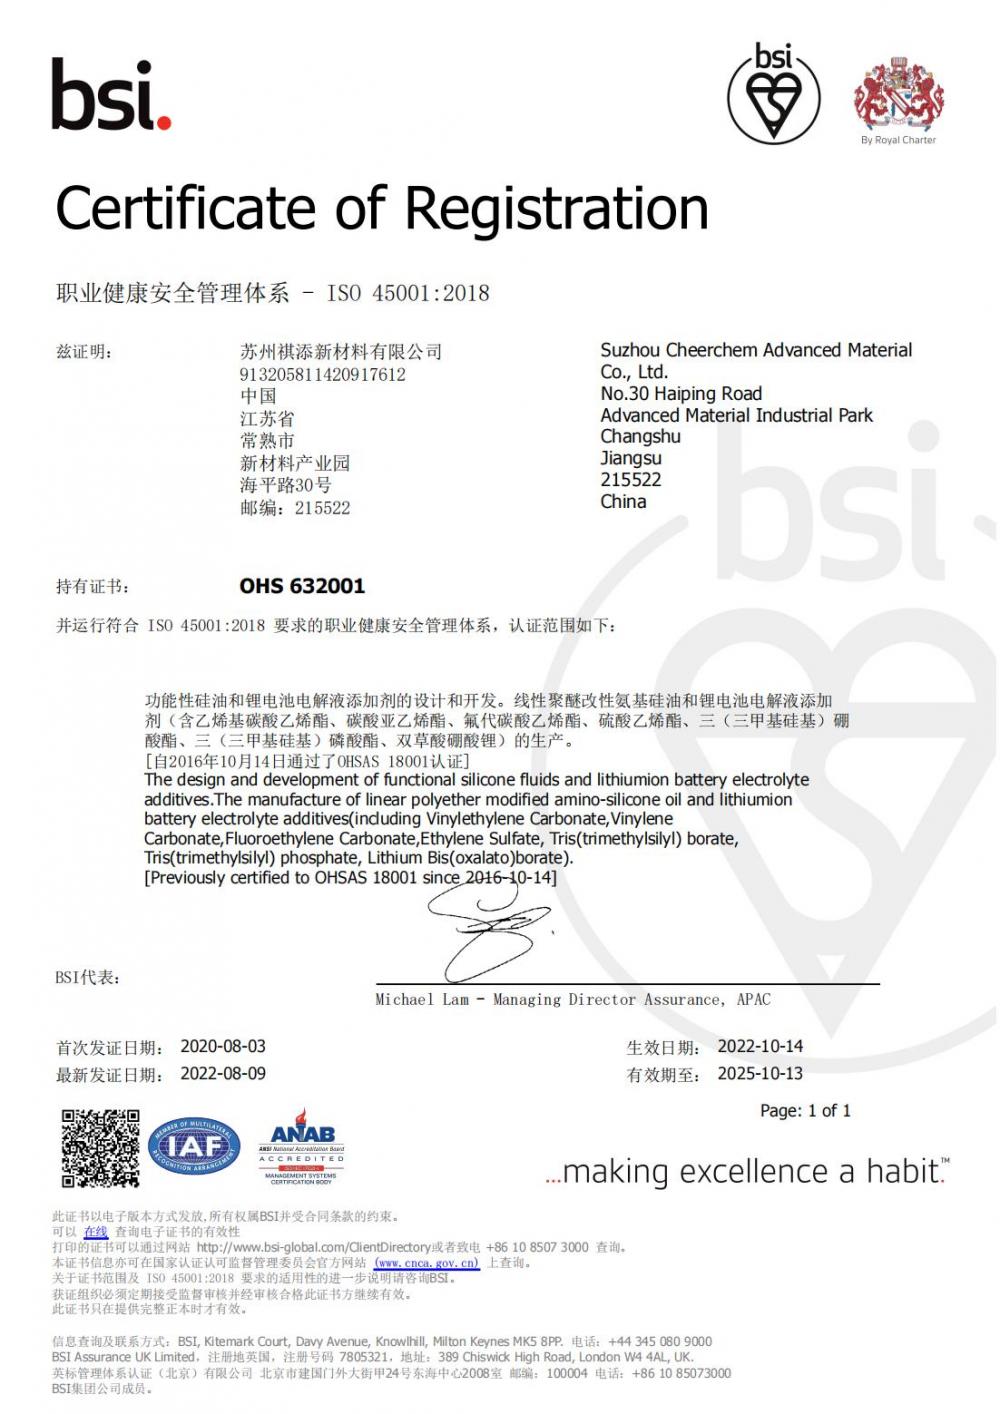 bsi Certificate of Registration